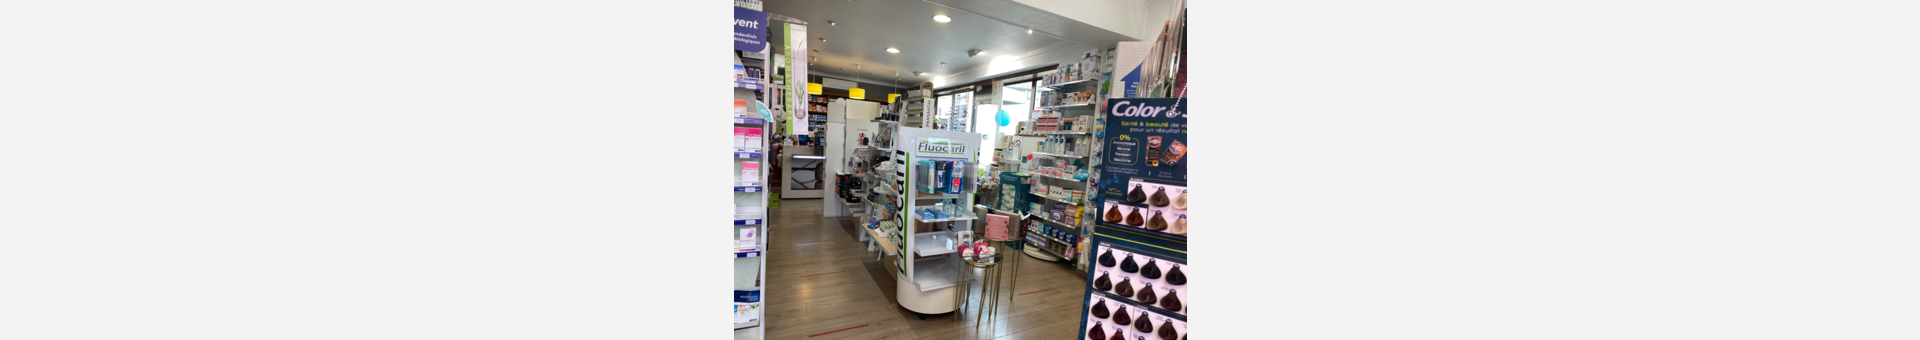 Pharmacie Laloy,Clermont-Ferrand